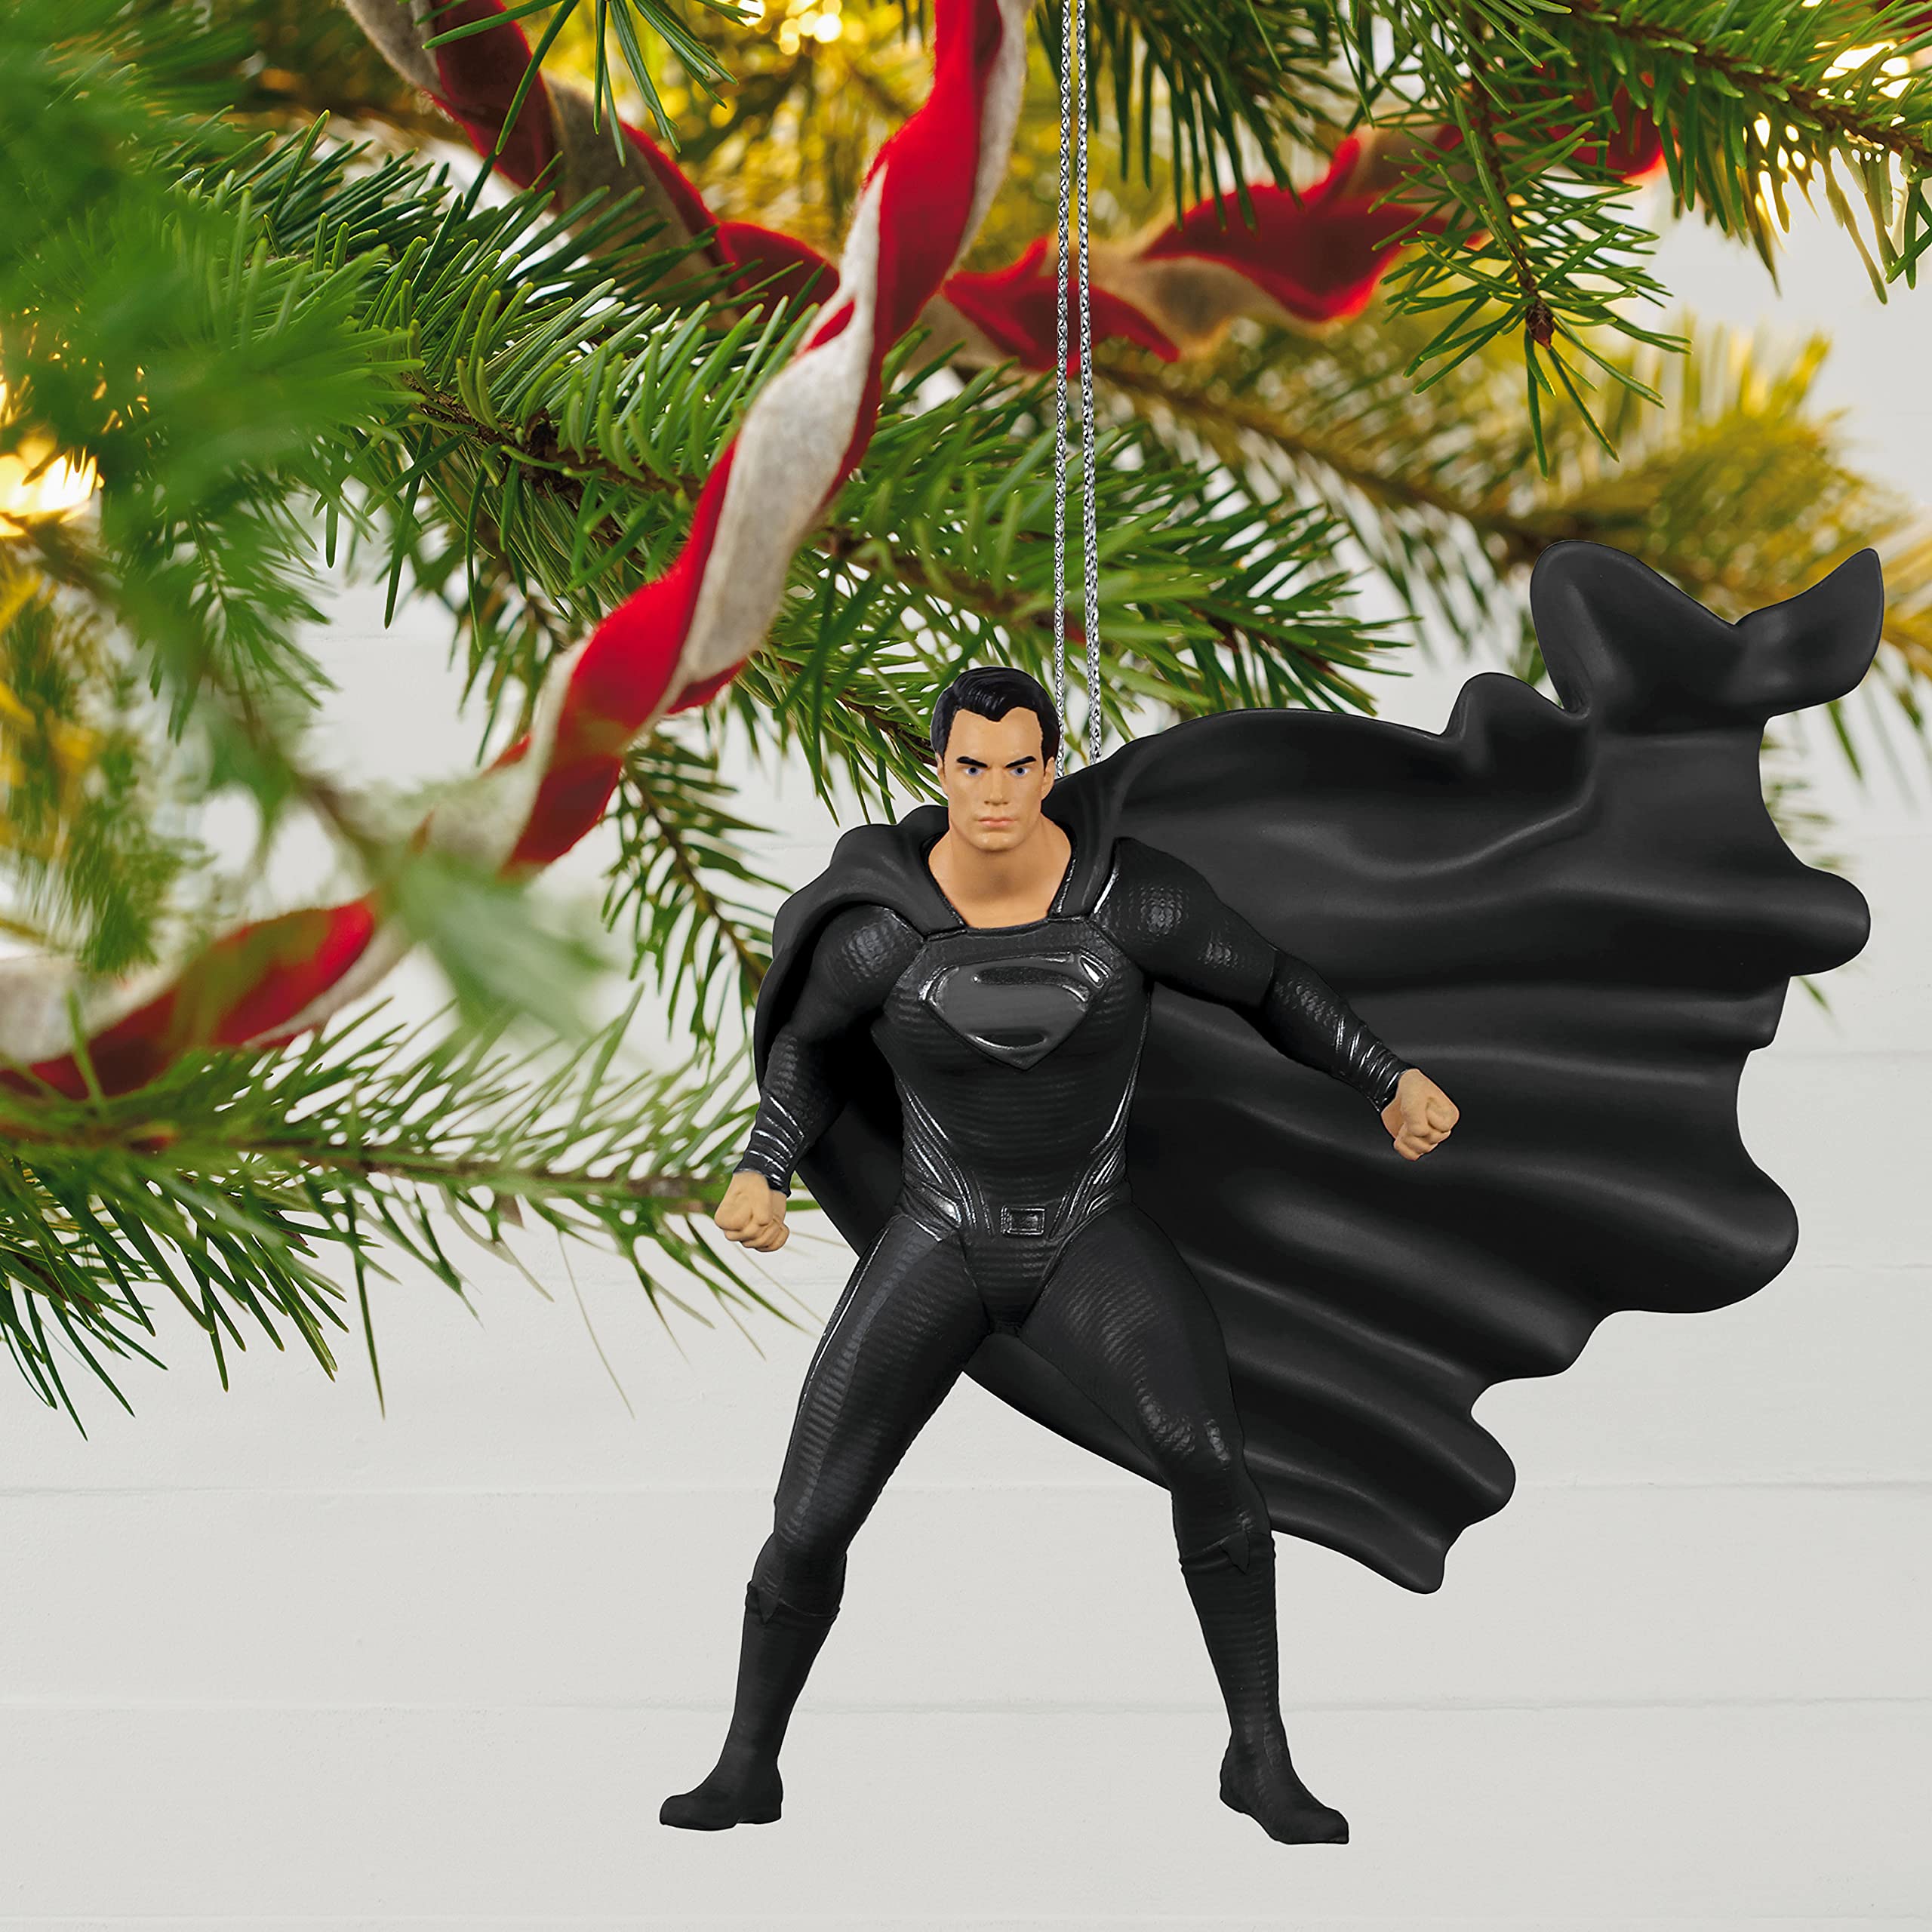 Justice League Superman Keepsake Christmas Ornament 2021